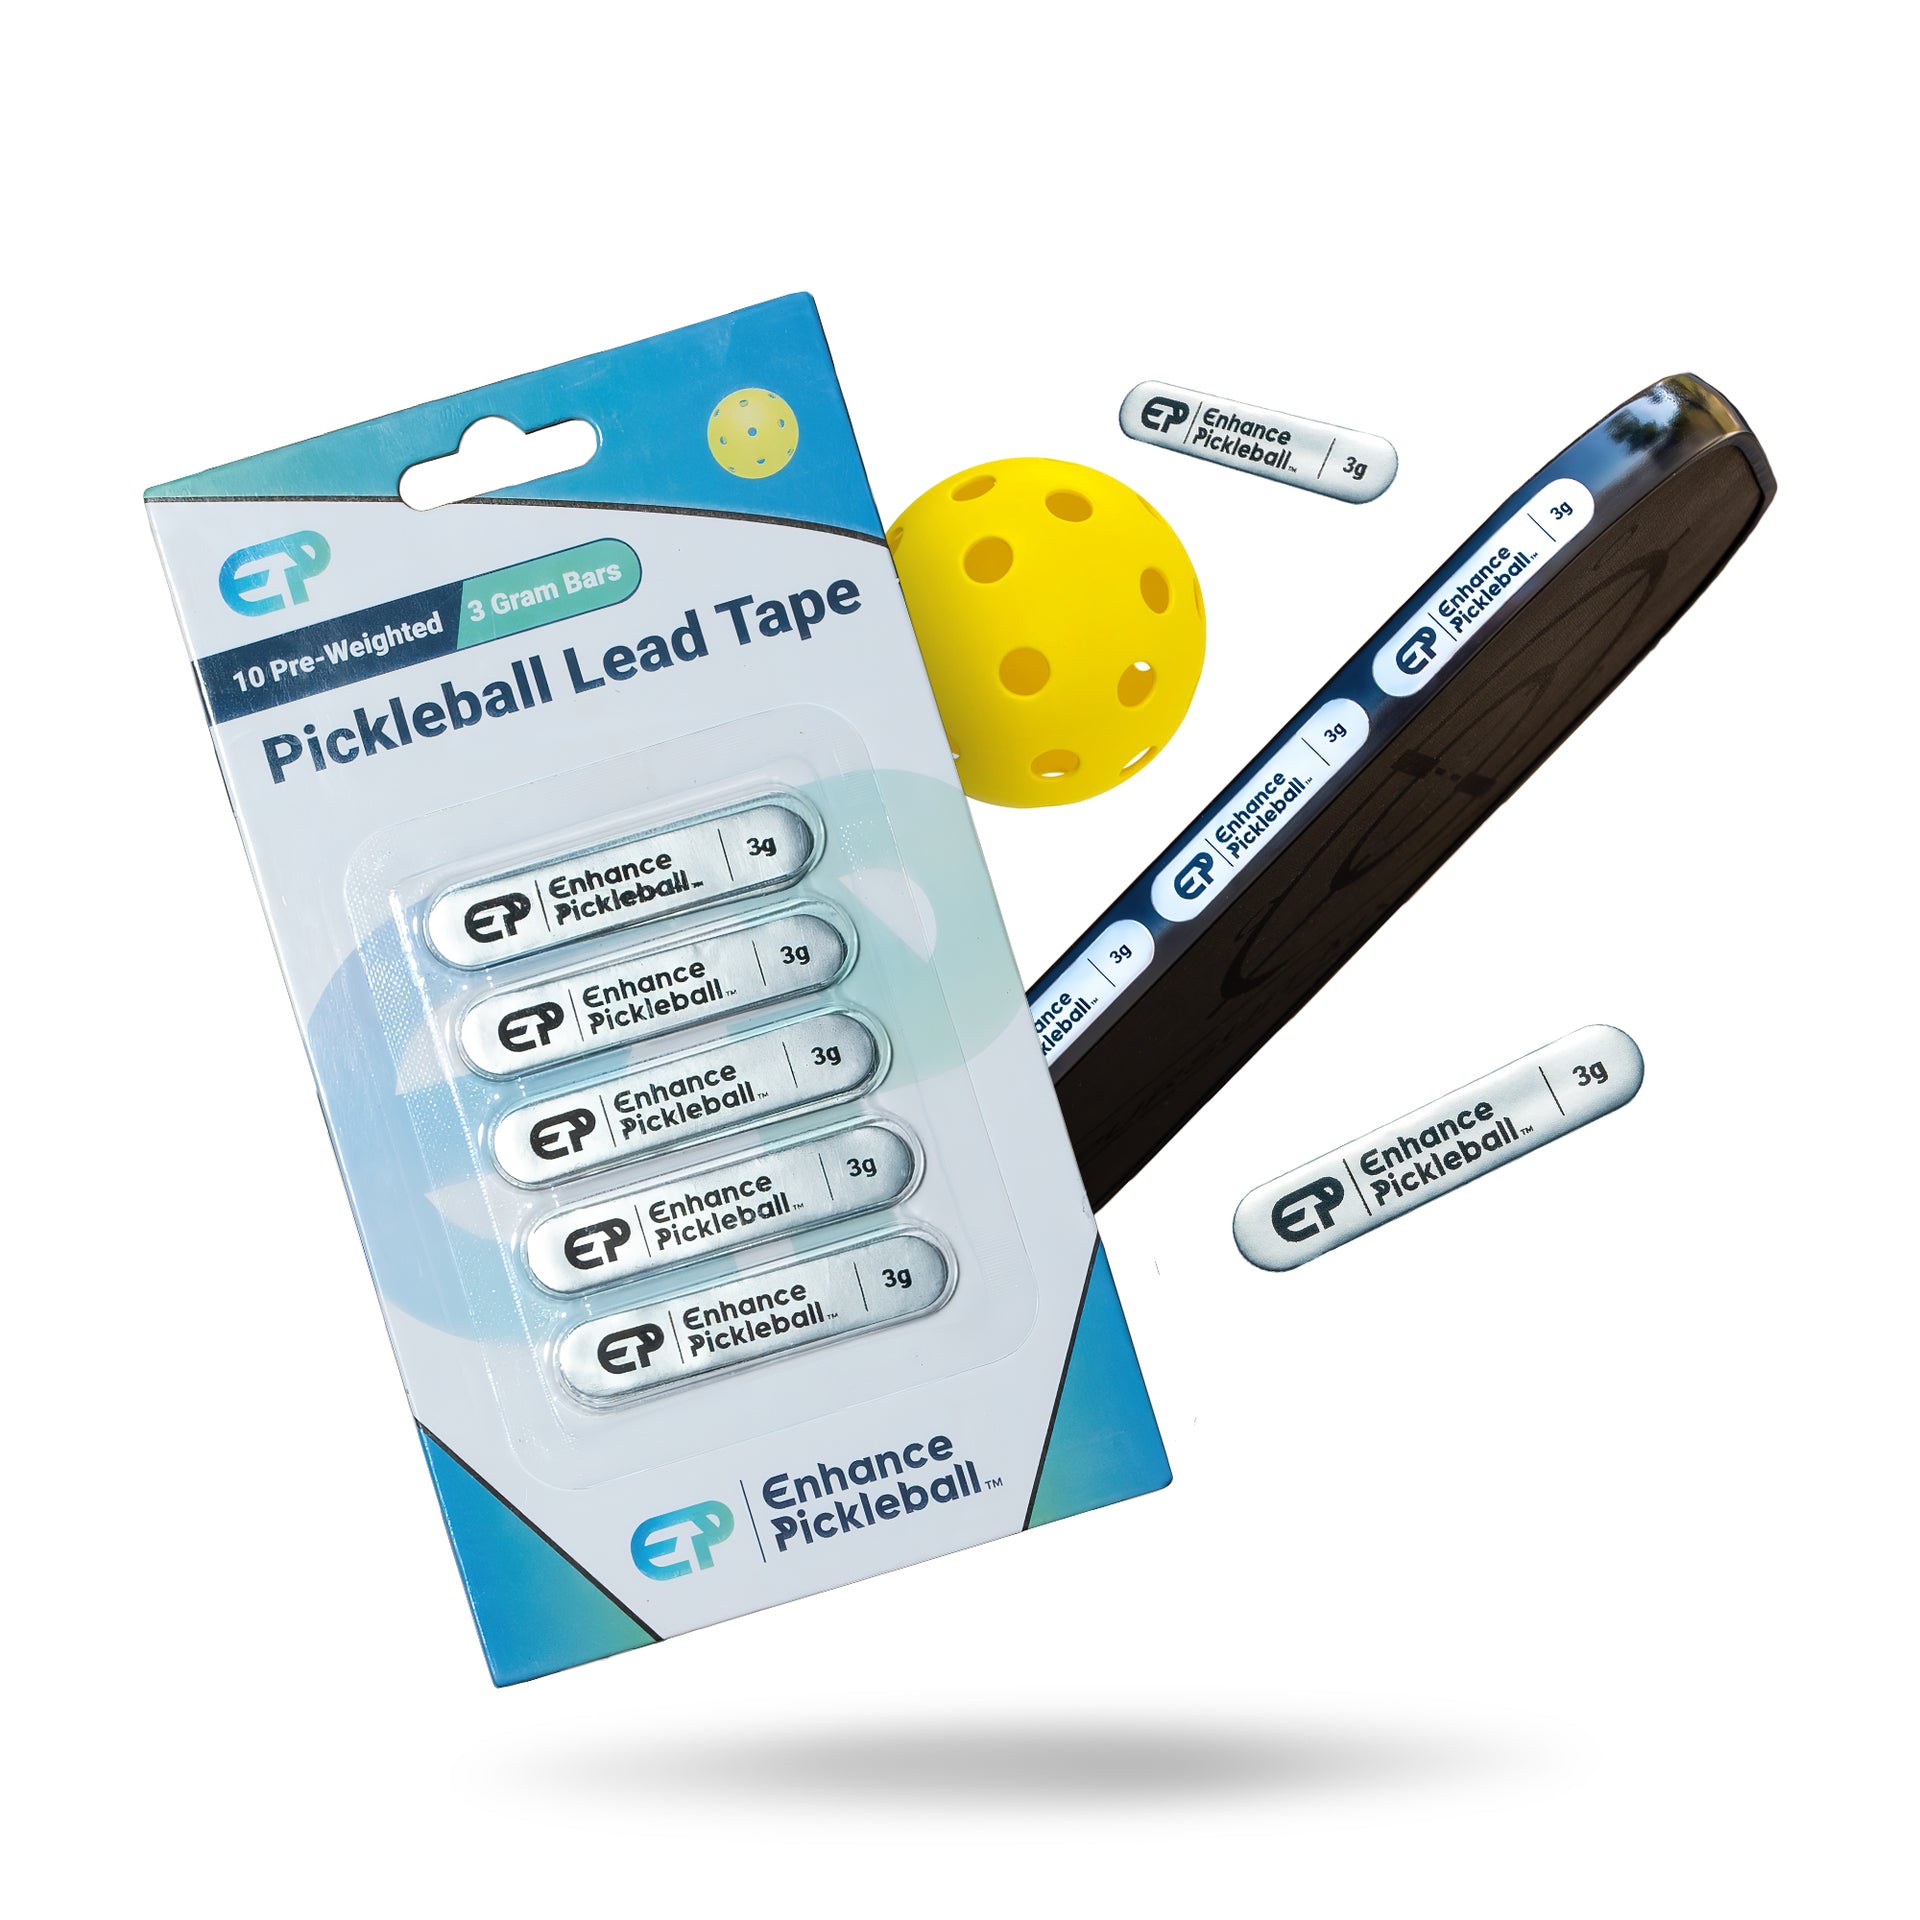 Pre-Weighted Pickleball Lead Tape – Enhance Pickleball